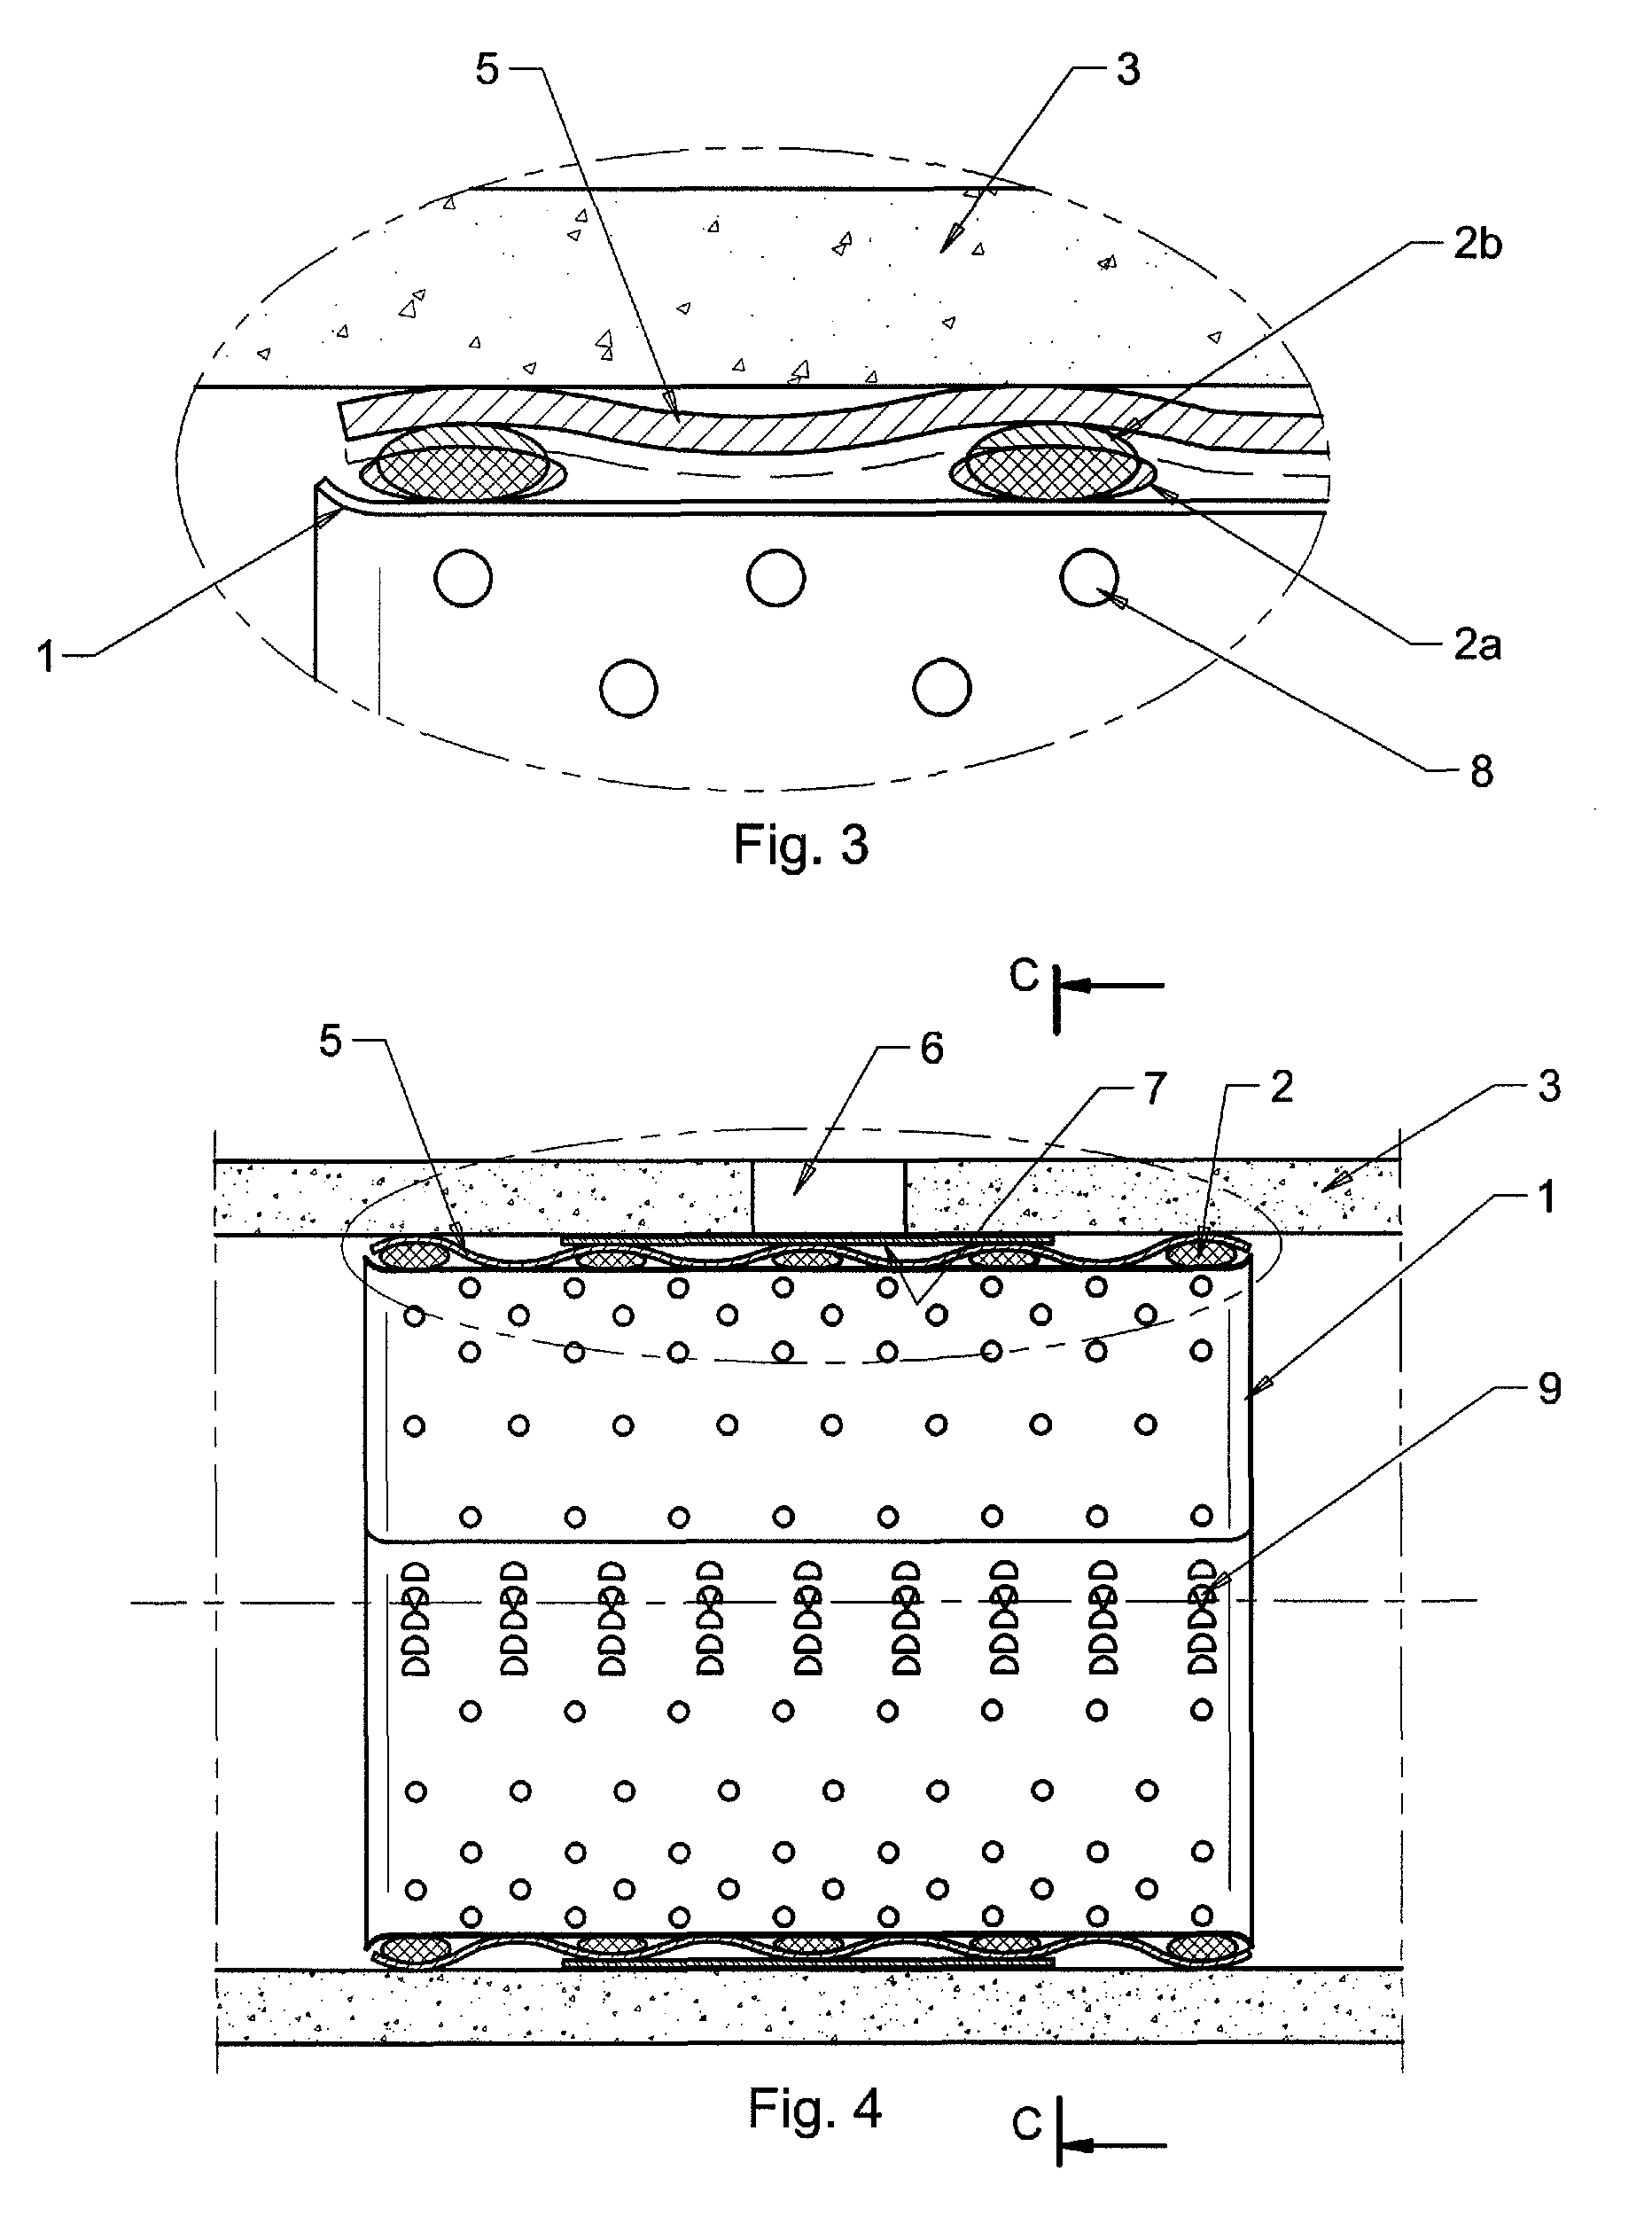 Apparatus and method for internal repair of conduits